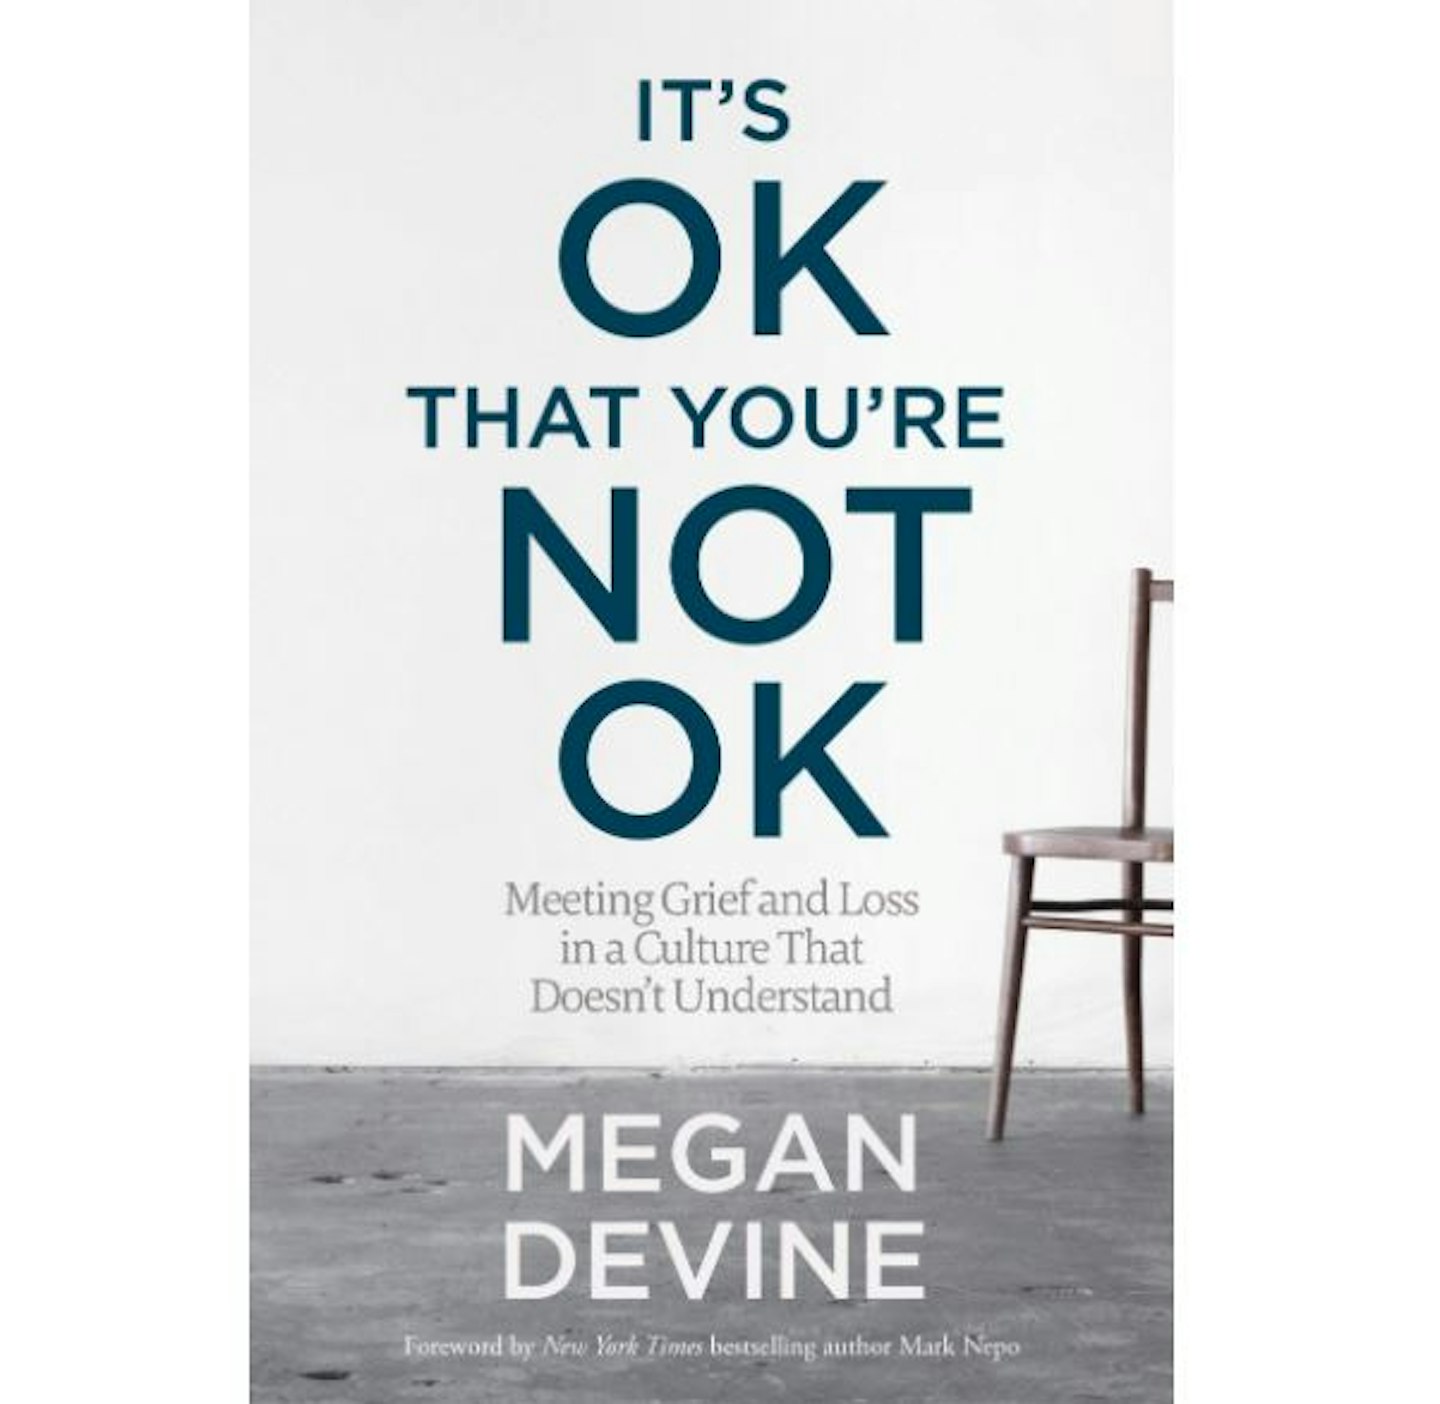 Itu2019s OK That Youu2019re Not OK by Megan Devine